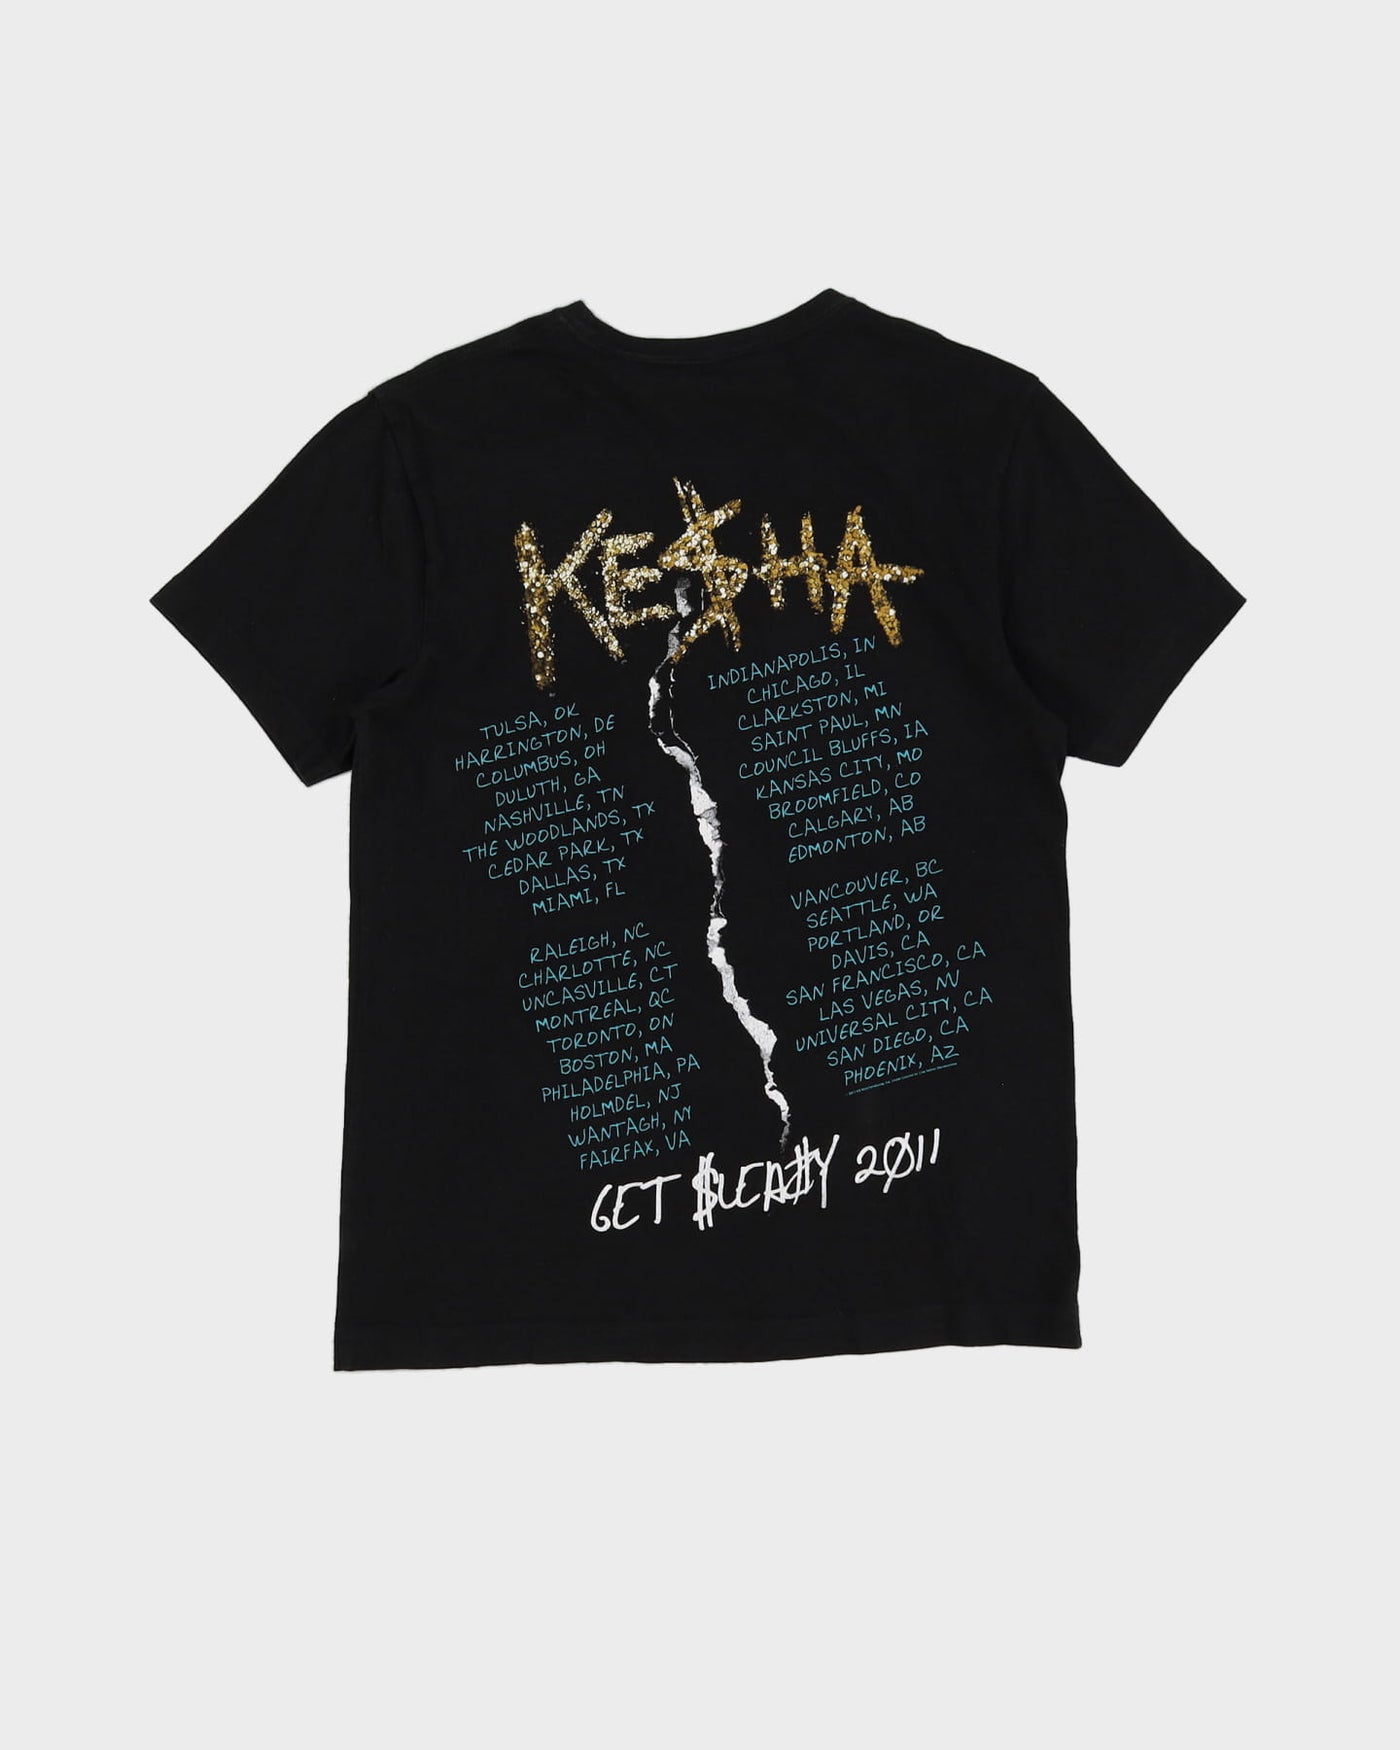 2011 Kesha Cannibal Black Graphic Band Tour T-Shirt - S